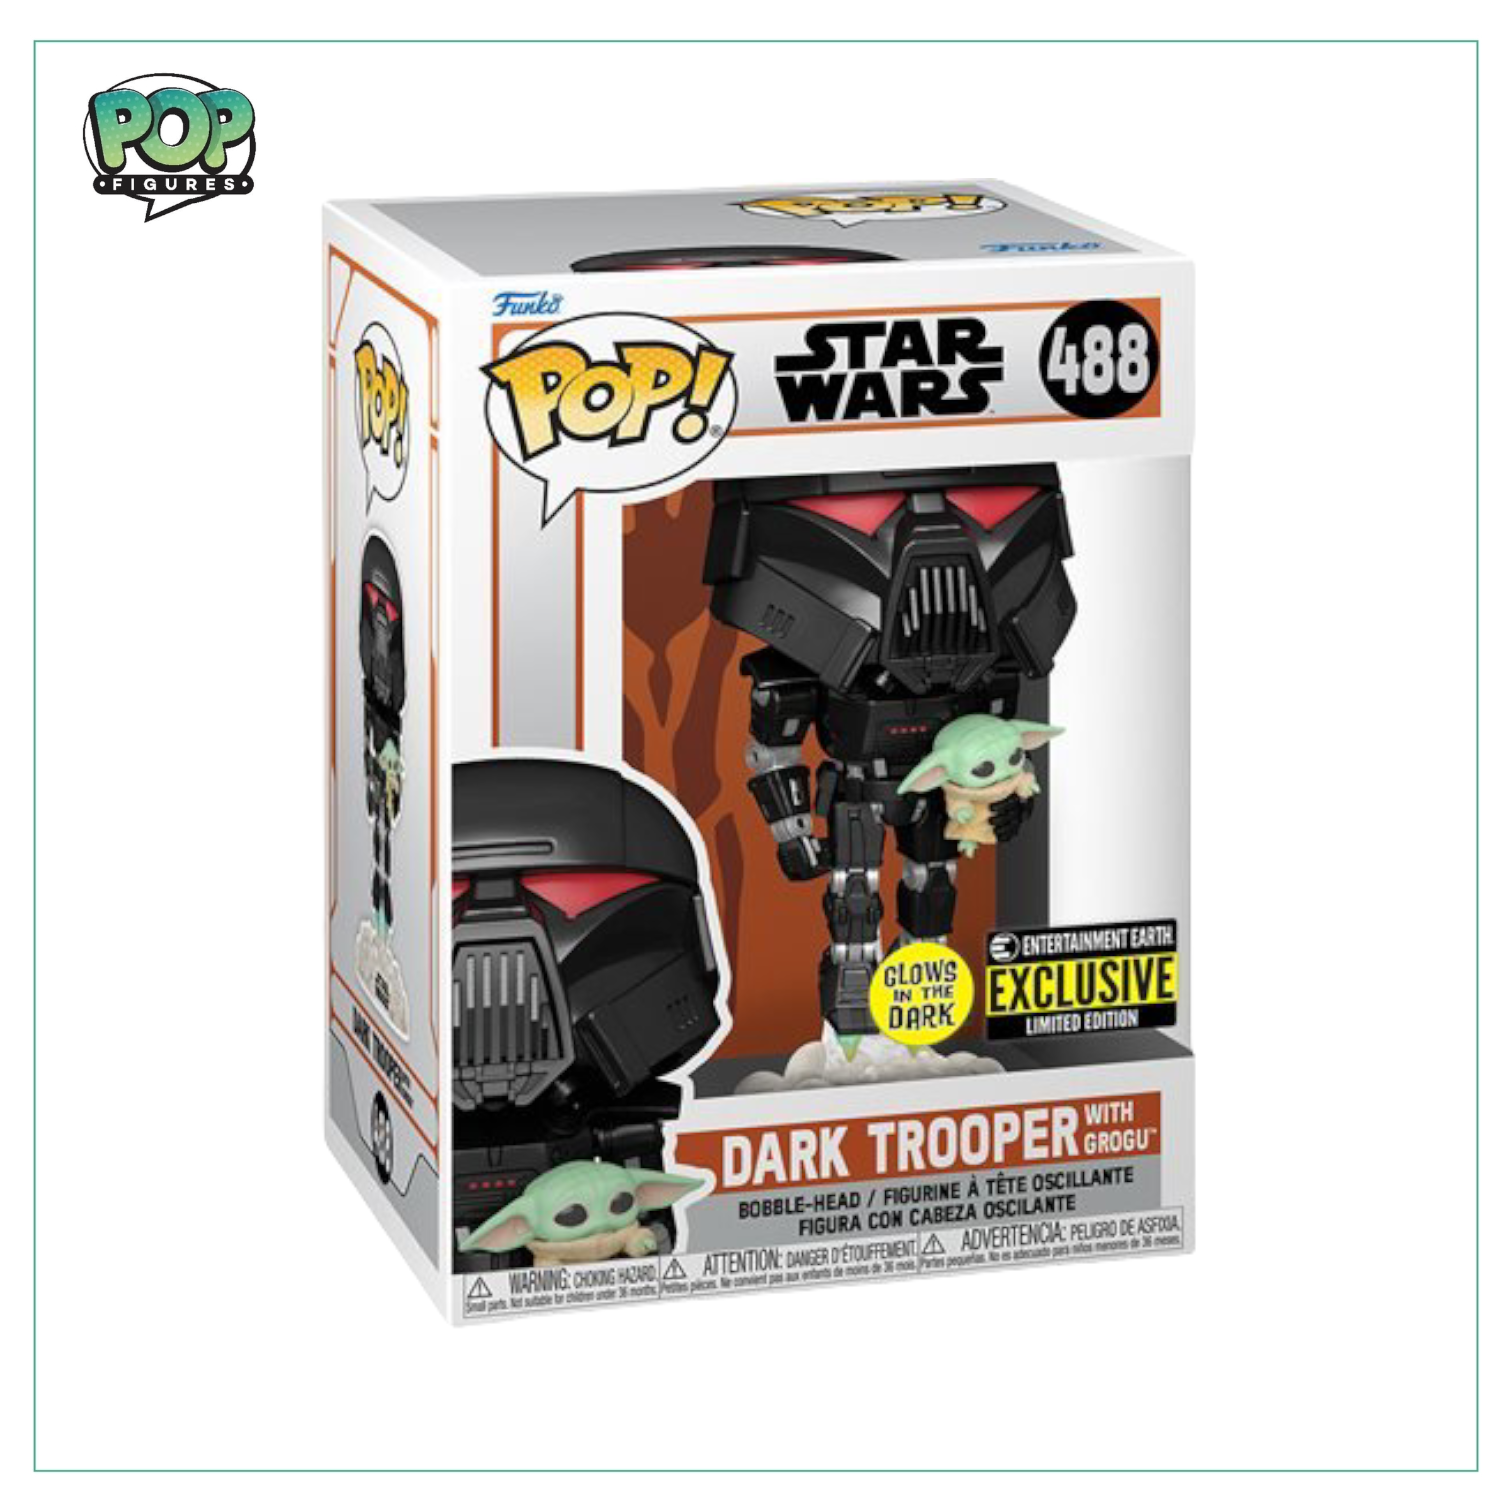 Dark Trooper With Grogu (Glows in the Dark) #488 Funko Pop! - Star Wars - Entertainment Earth Exclusive